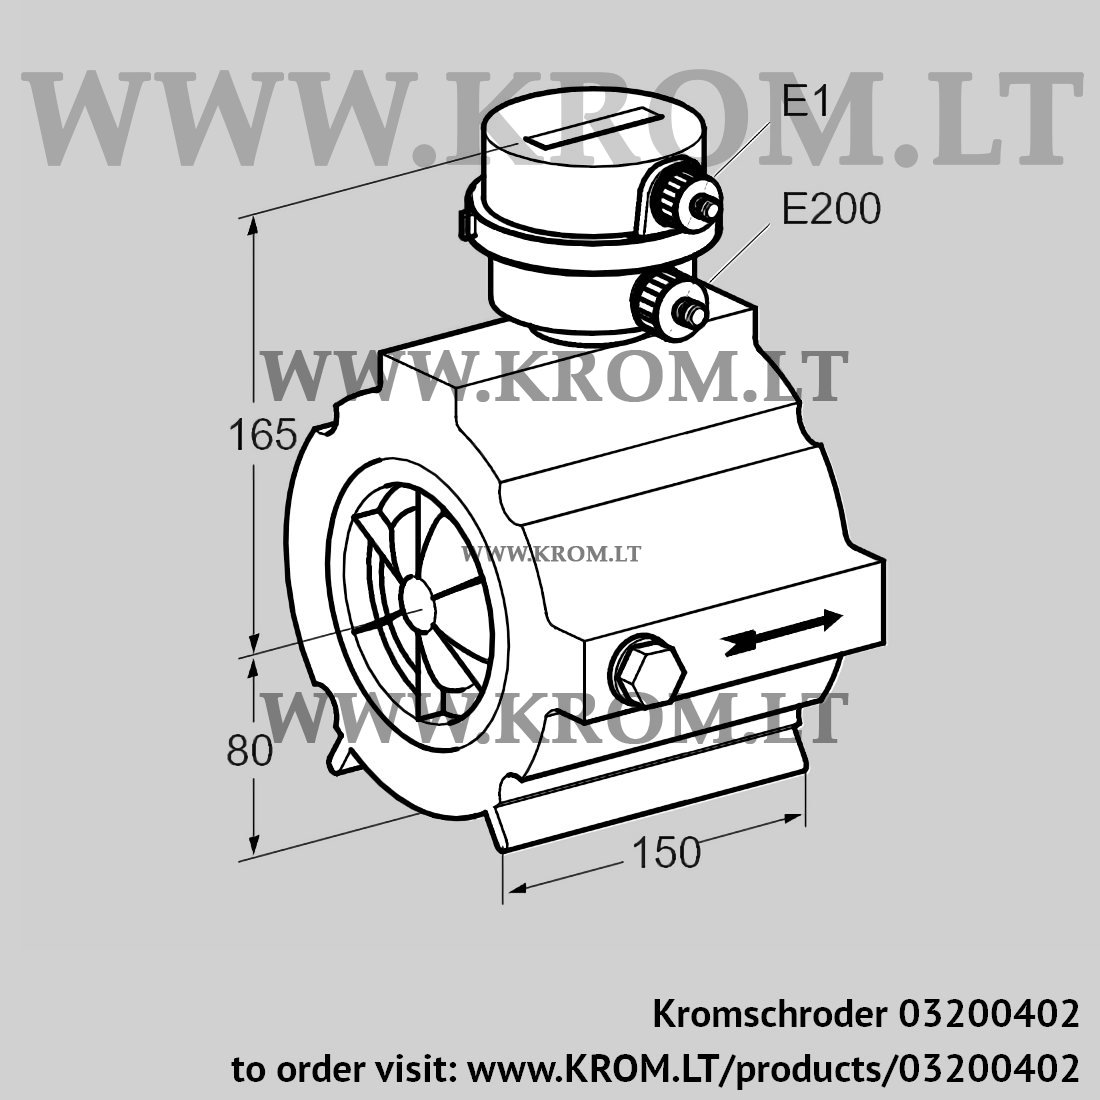 Kromschroder DM 400Z100-40, 03200402 flow meter